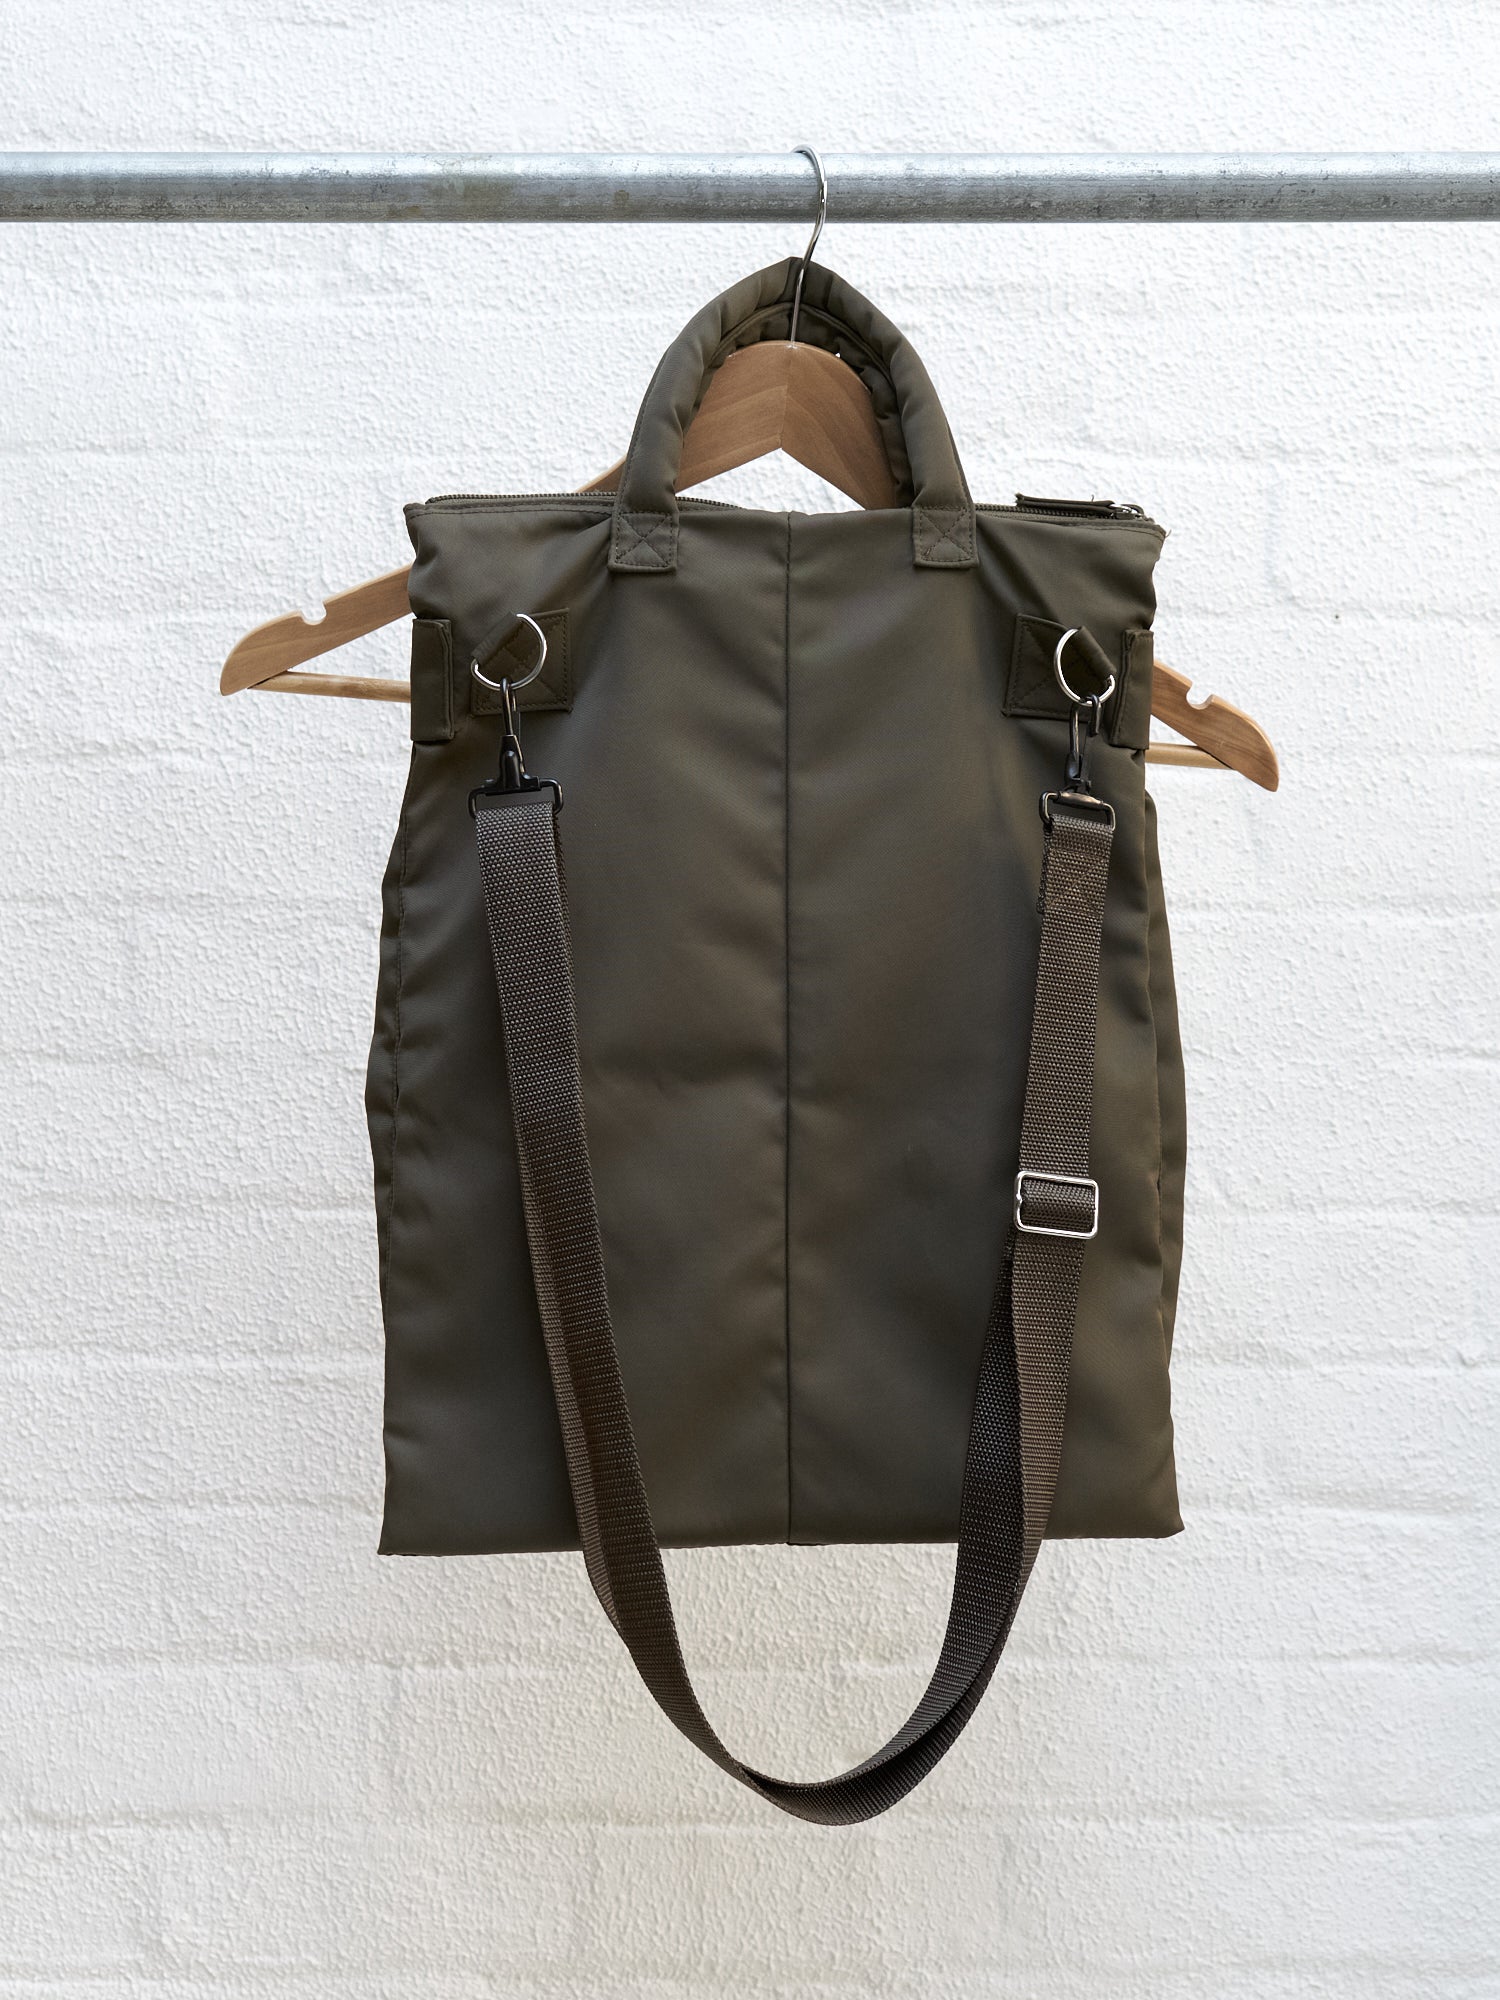 Helmut Lang 1990s-2000s khaki nylon twill shoulder bag